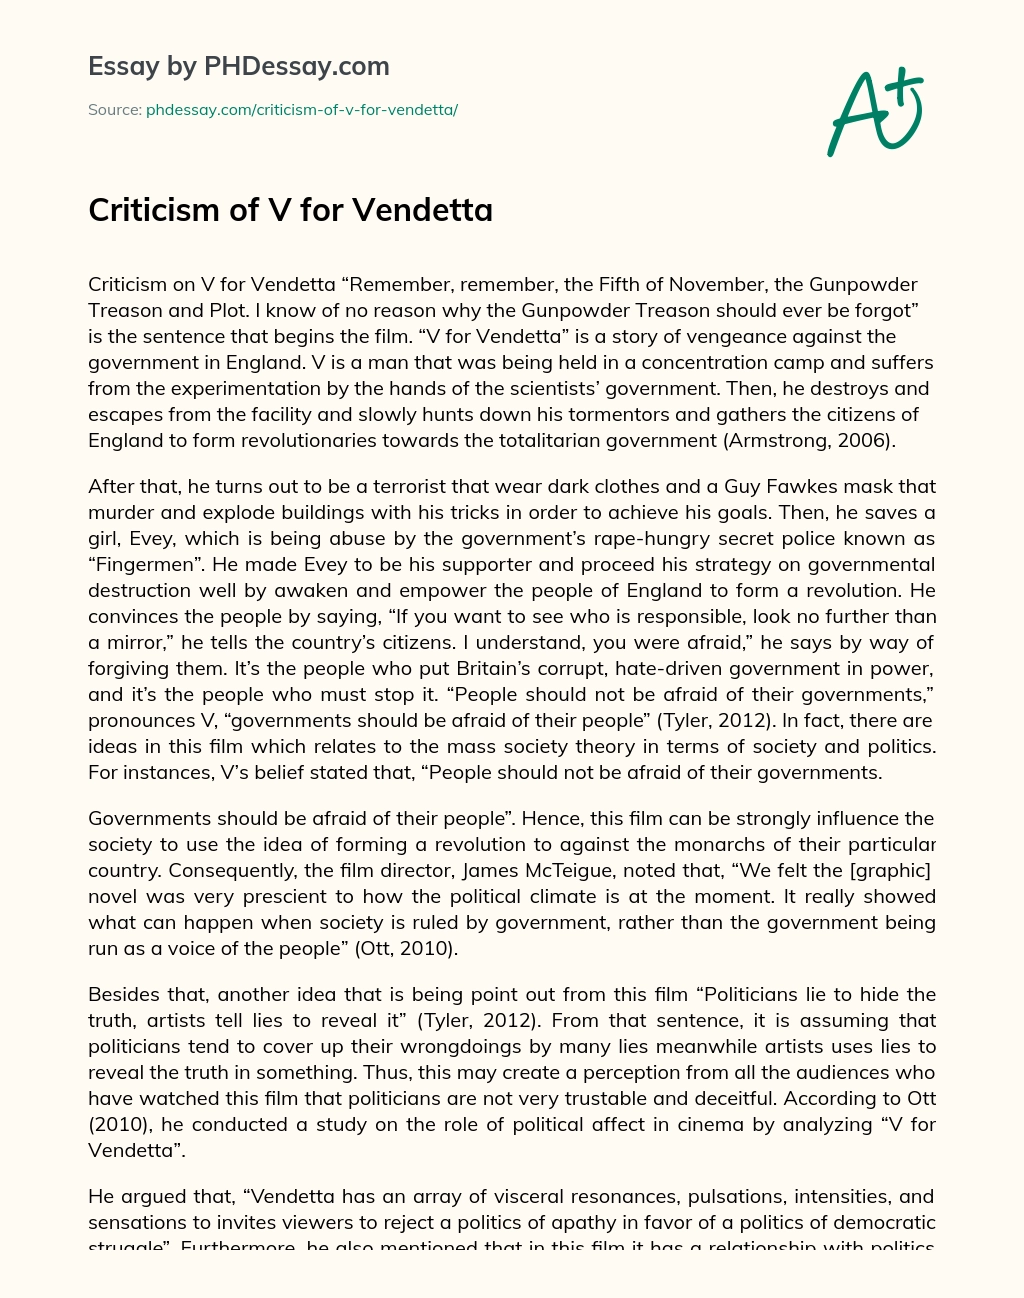 Criticism of V for Vendetta essay